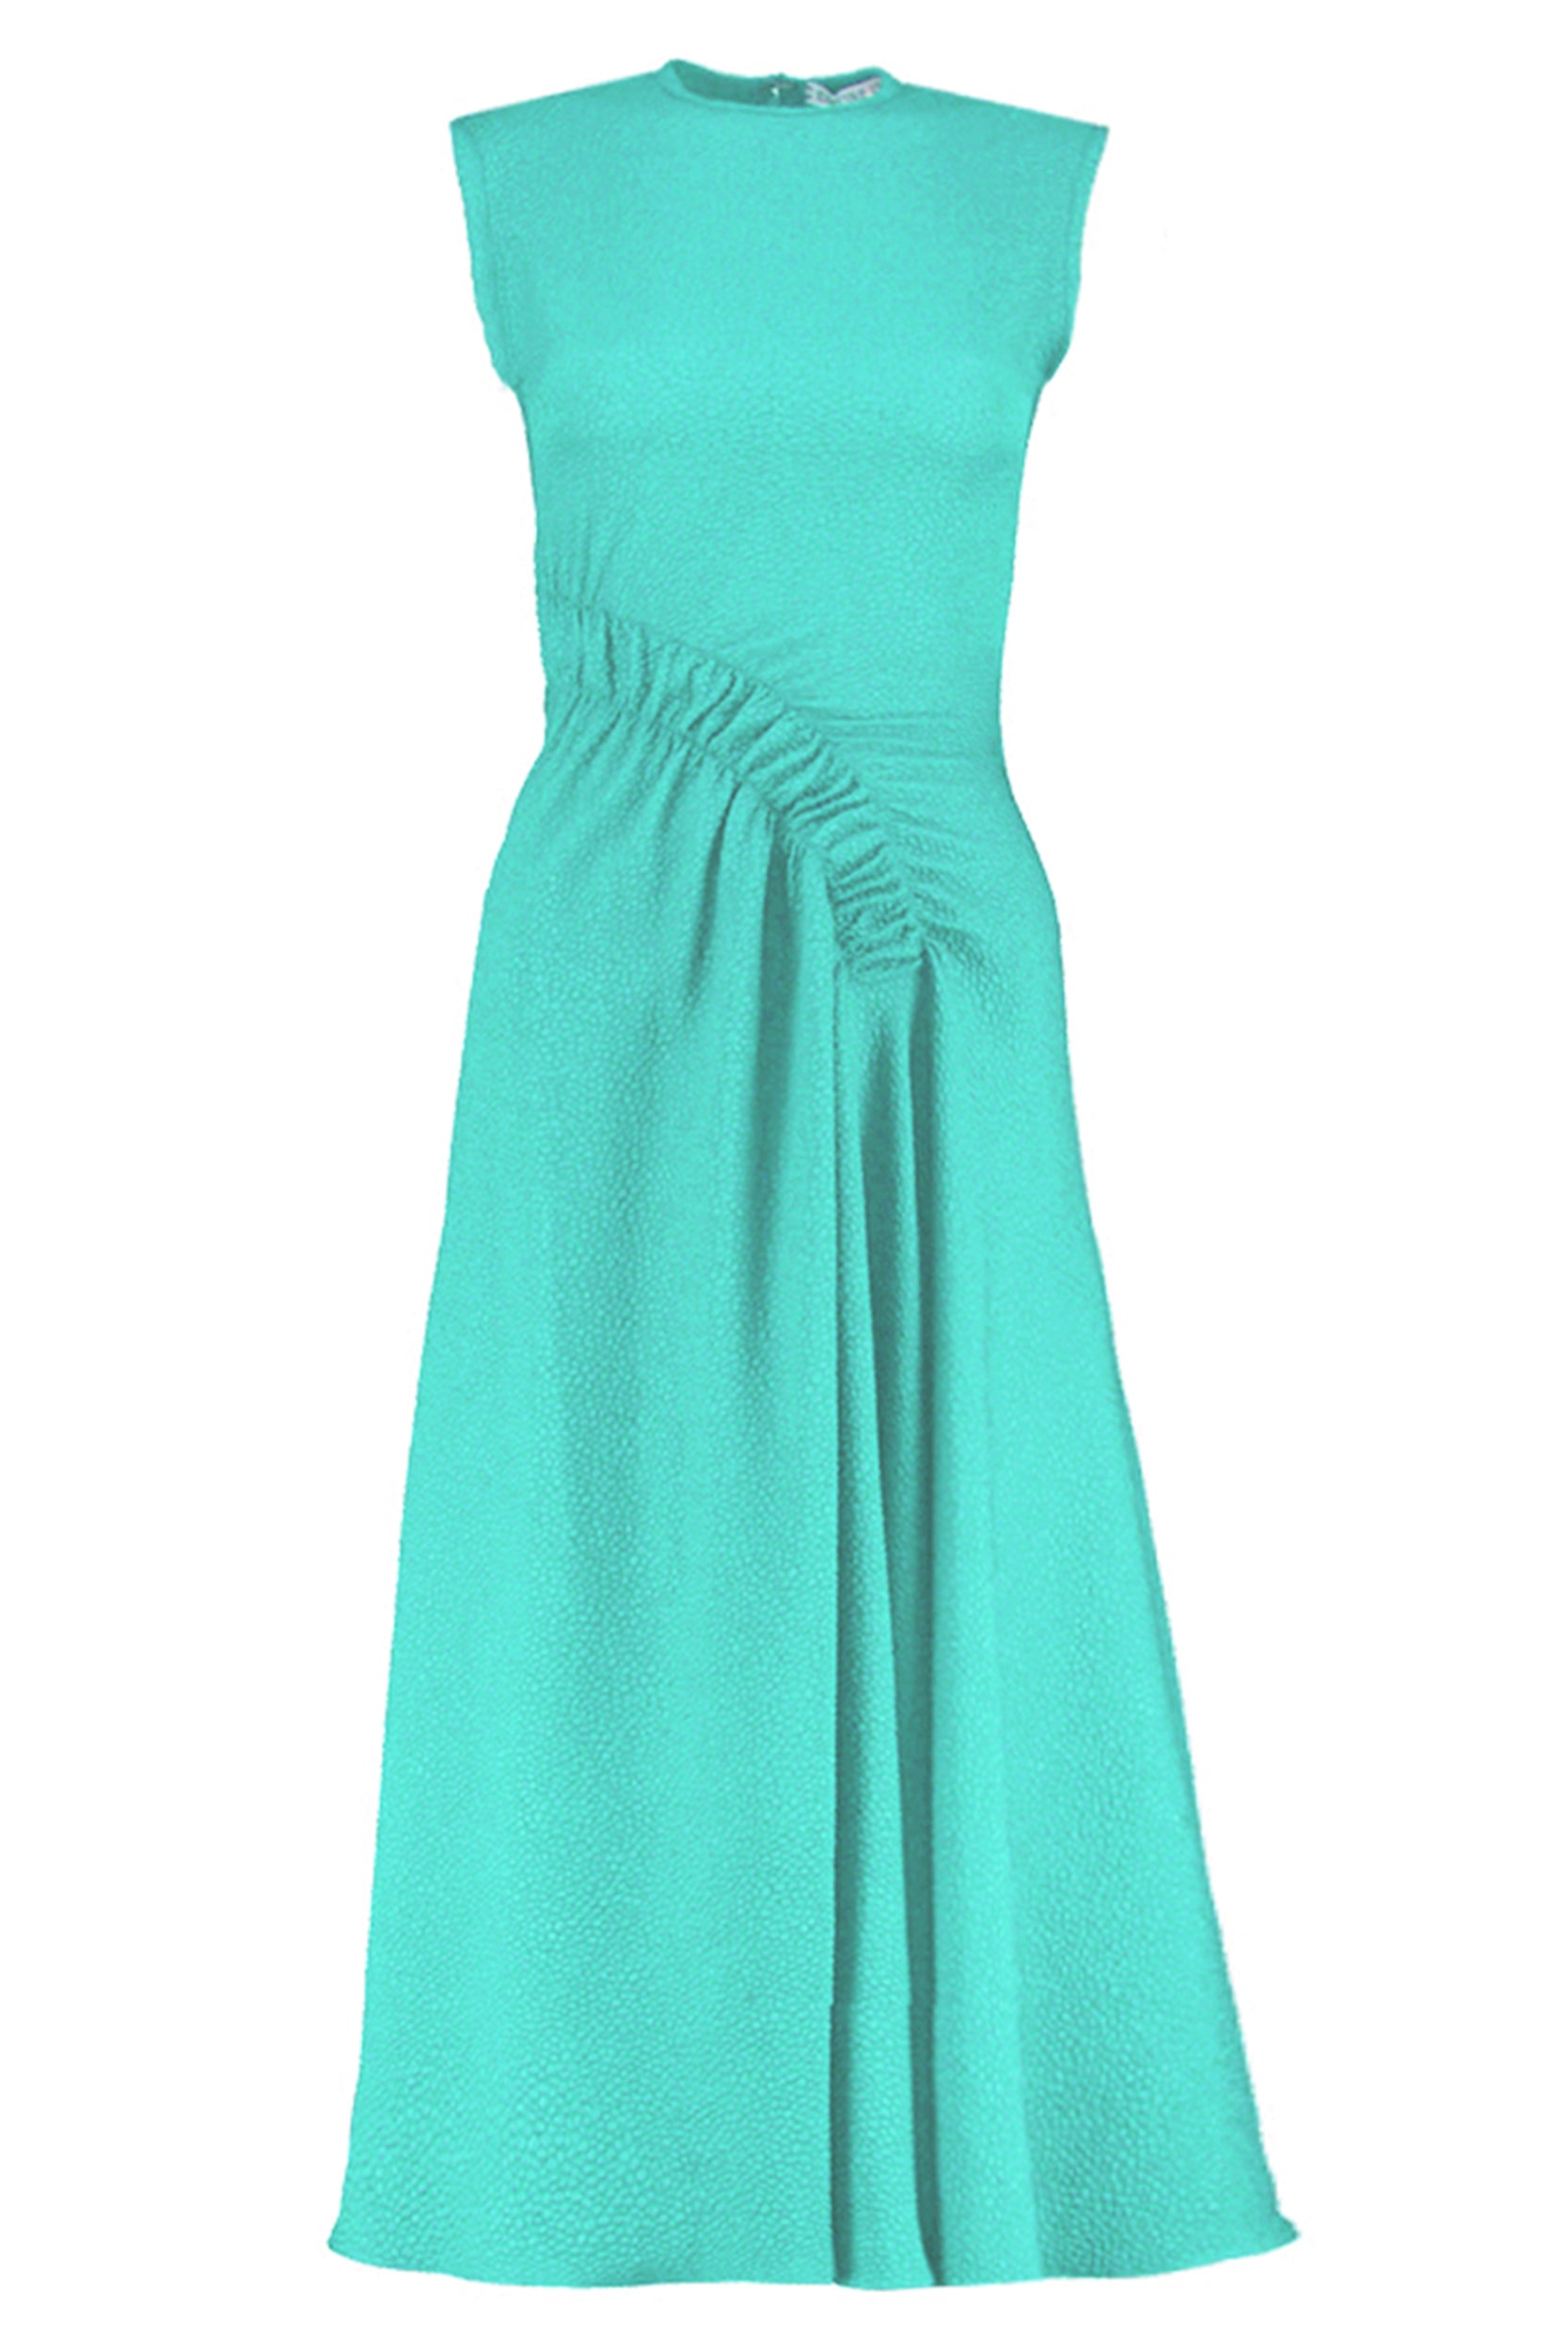 Iridescent Lime Bubble Dress  Bubble dress, Fashion week spring, Green  fashion